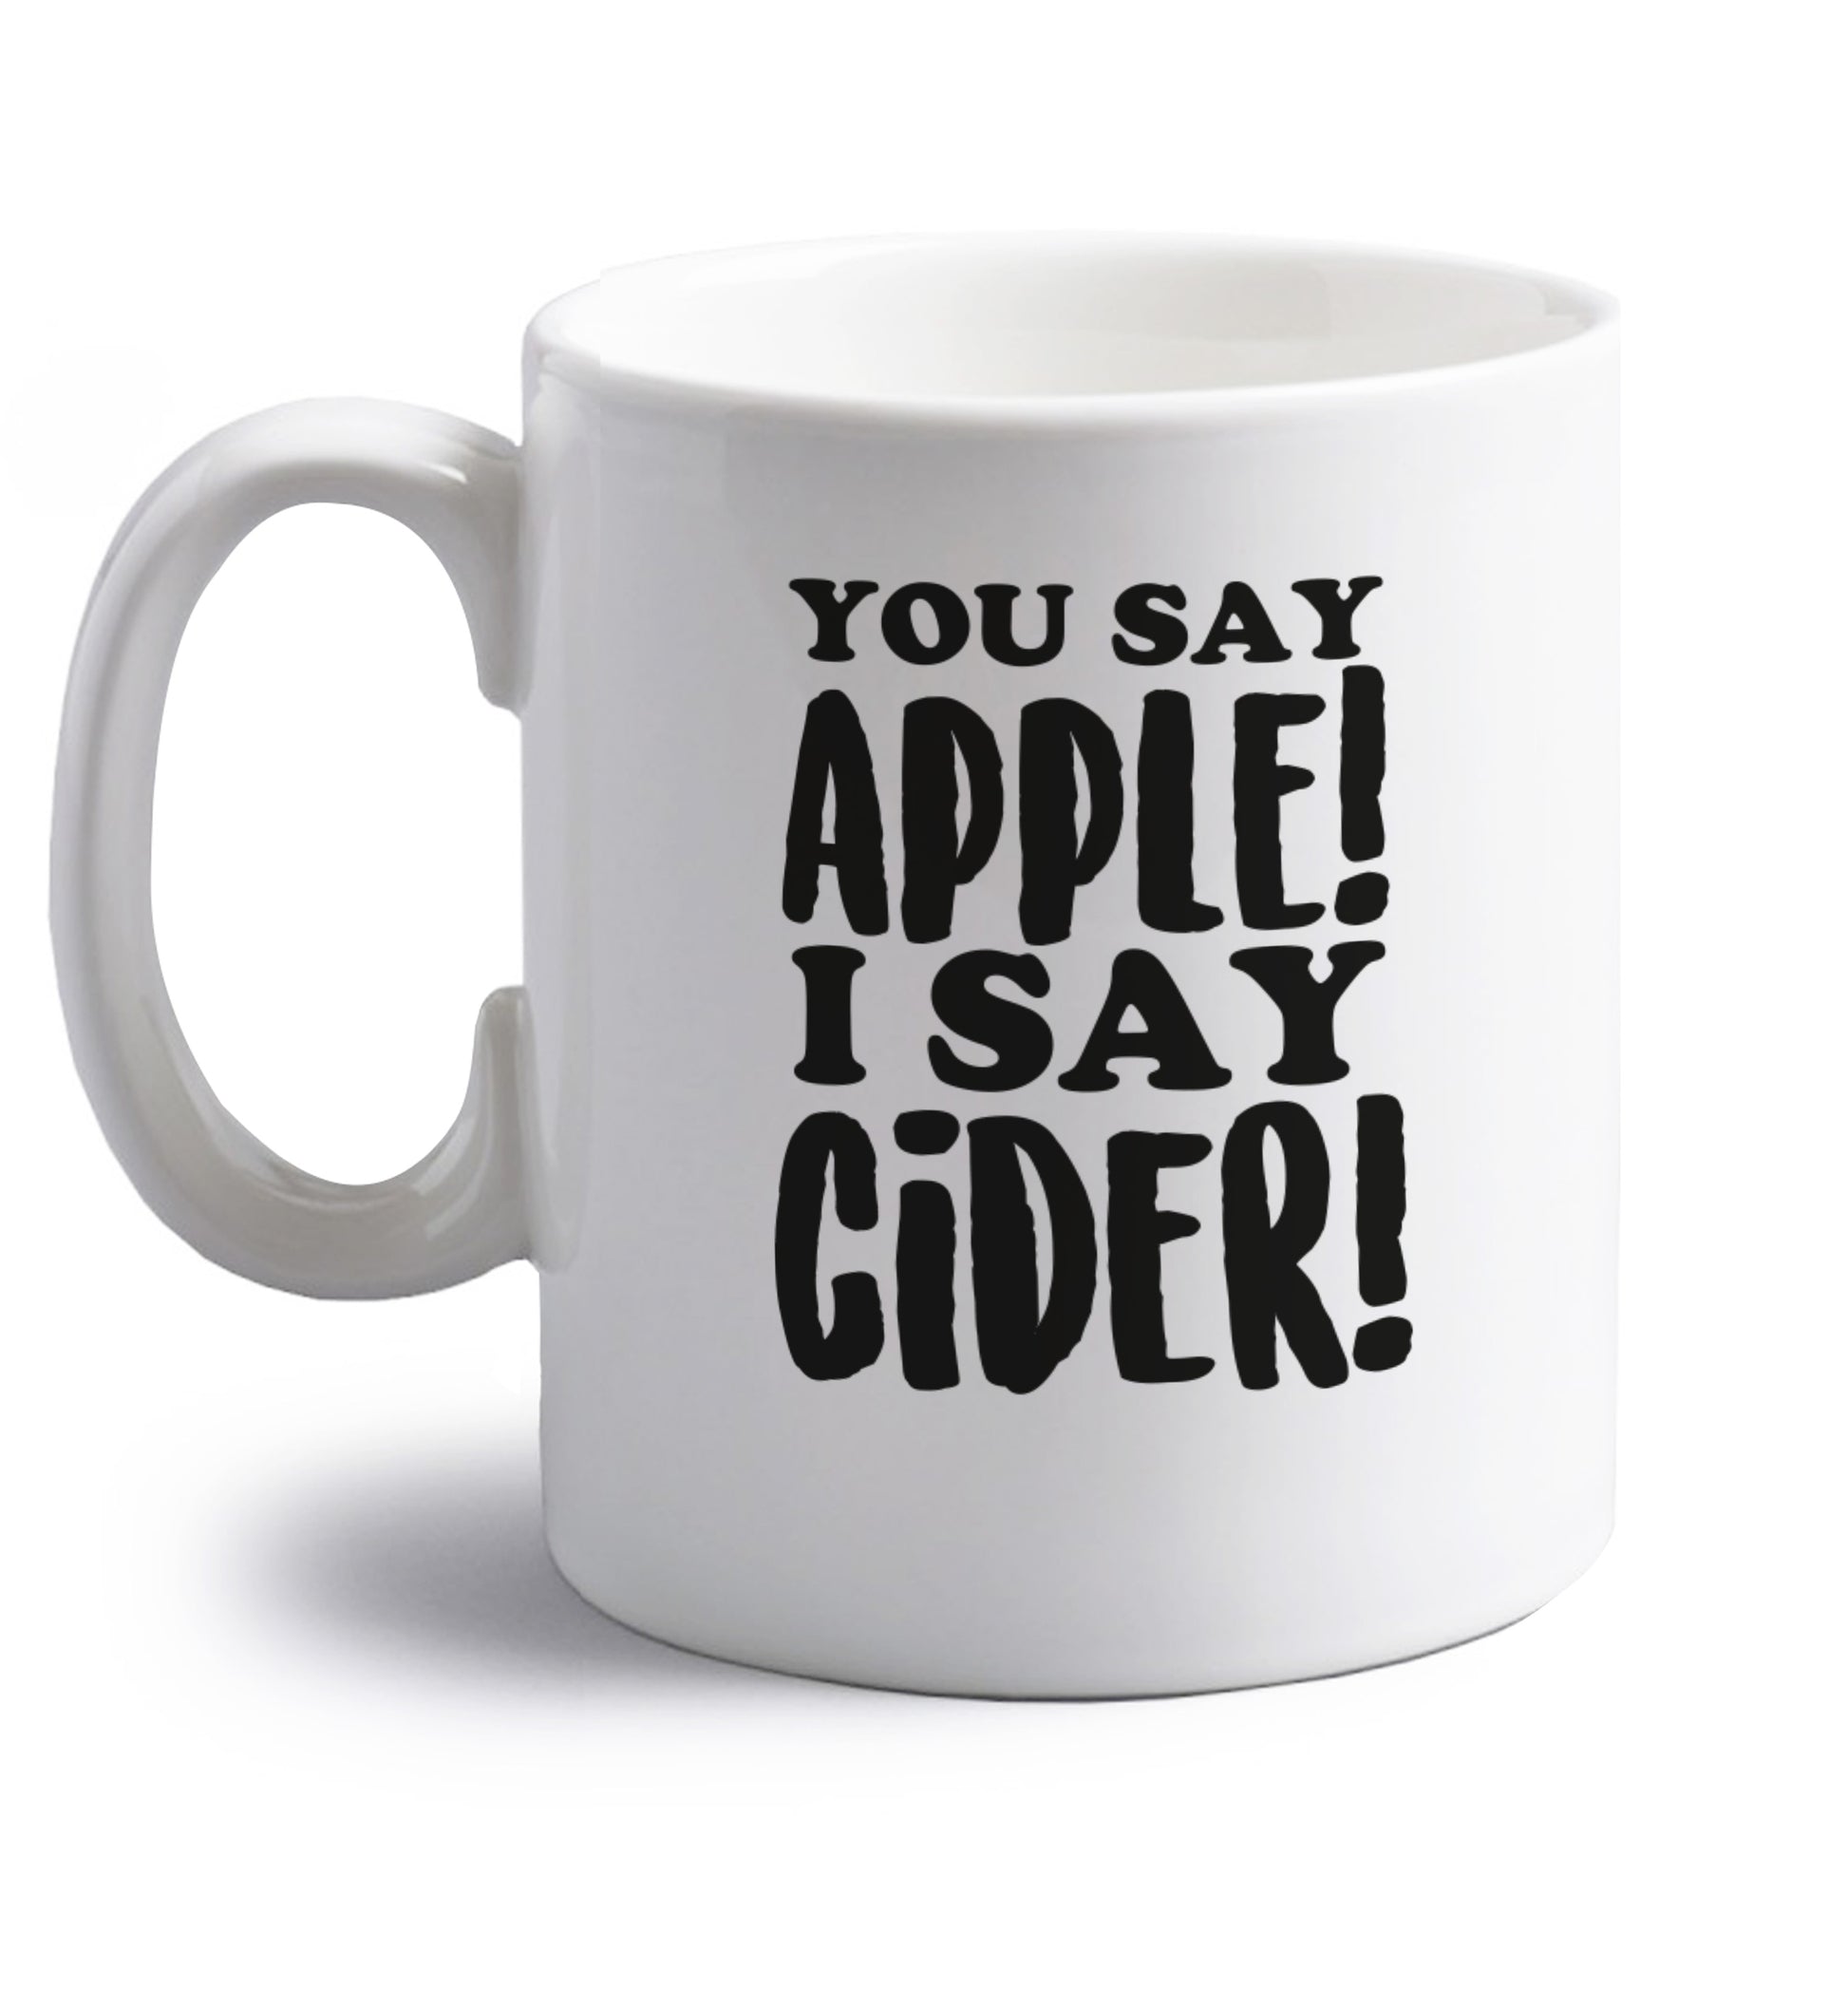 You say apple I say cider! right handed white ceramic mug 